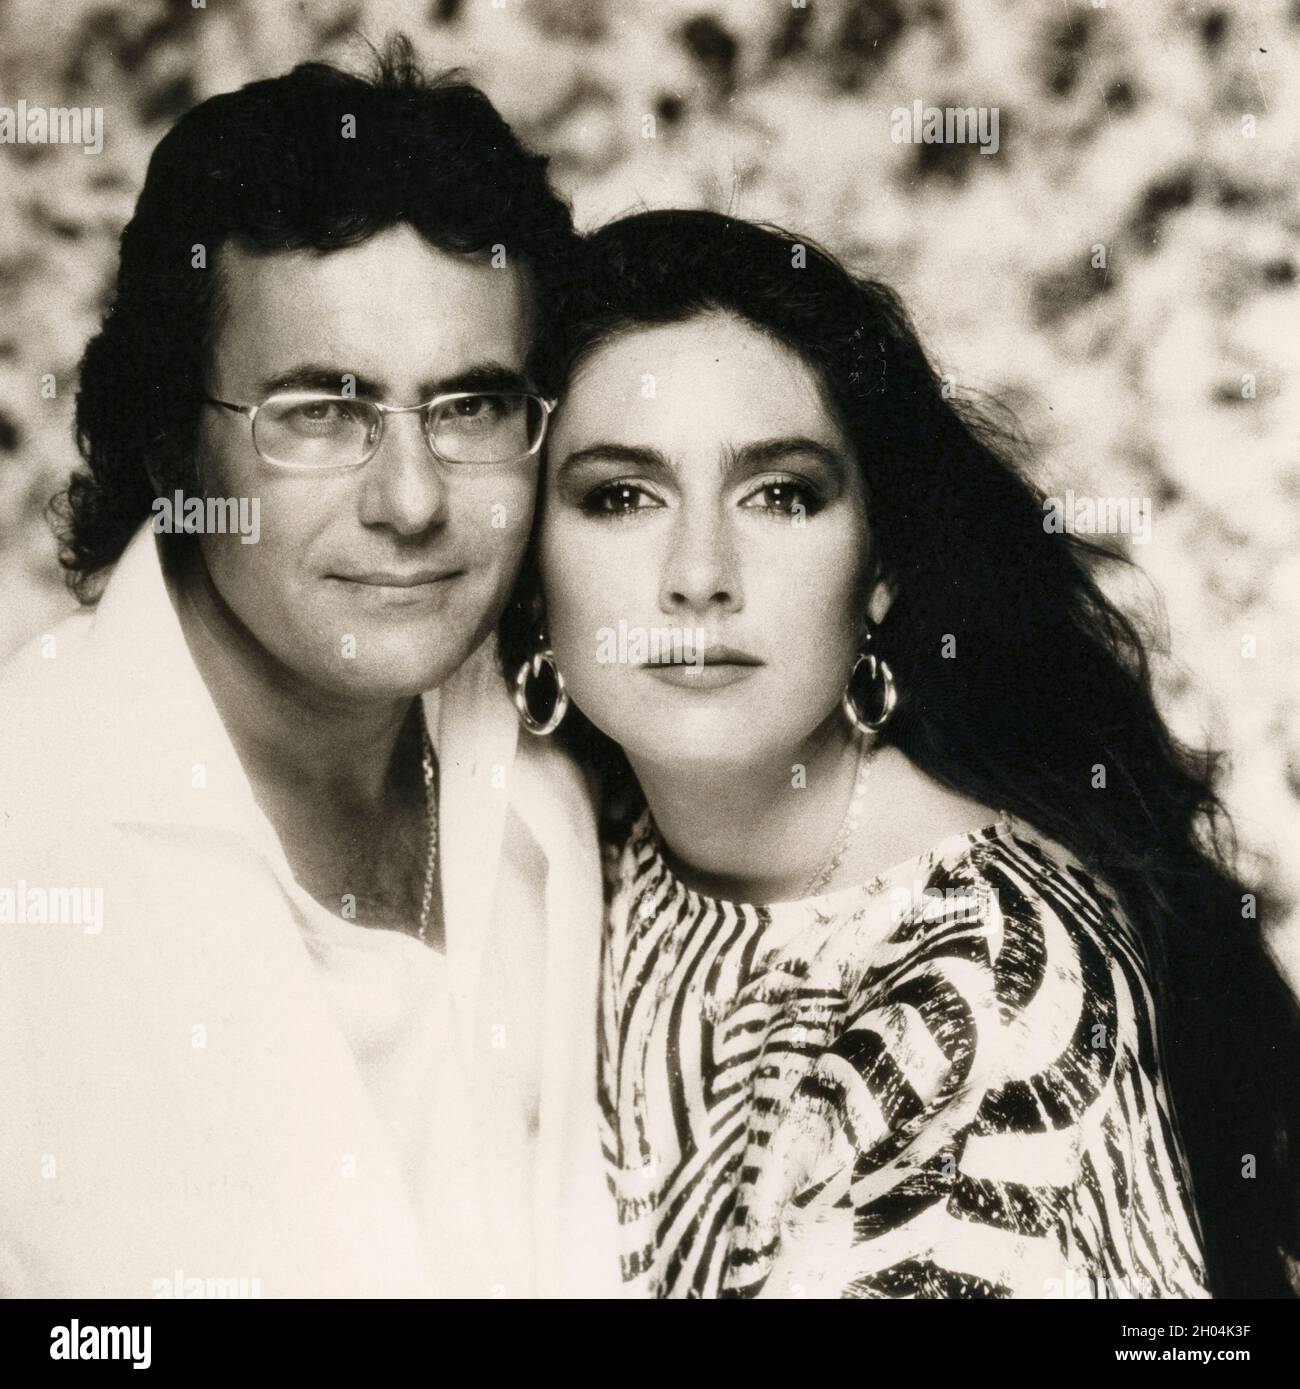 Italian singers and actors Albano and Romina Power, 1980s Stock Photo